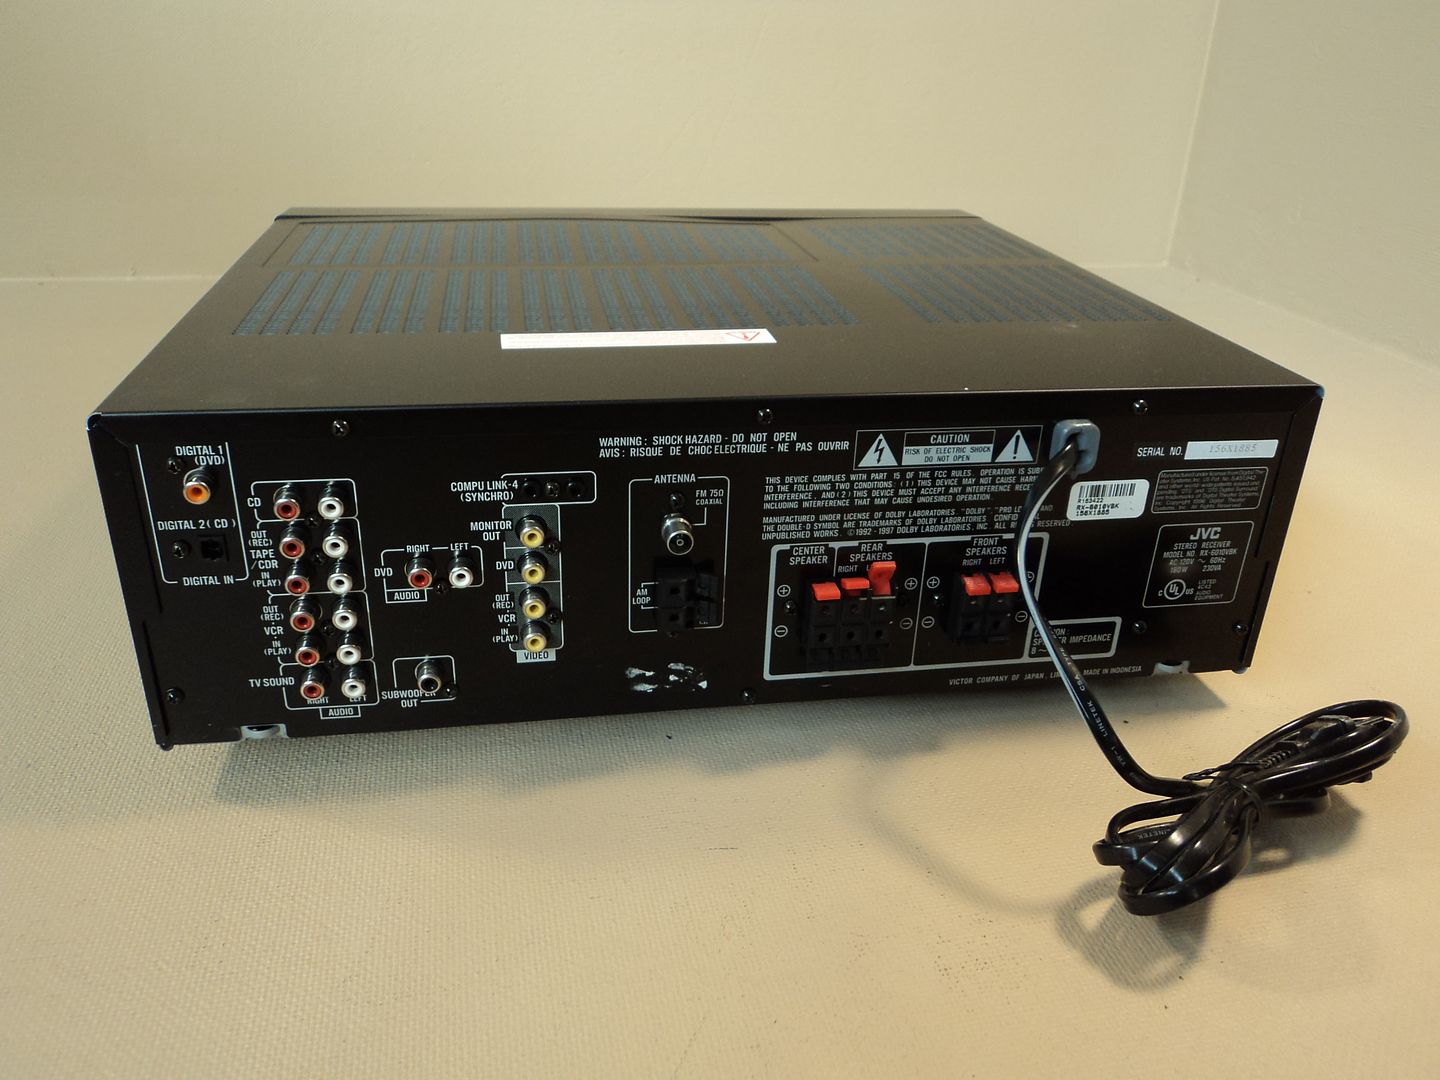 JVC Audio Video Stereo Control Receiver Compulink Remote 180W RX 6010VBK